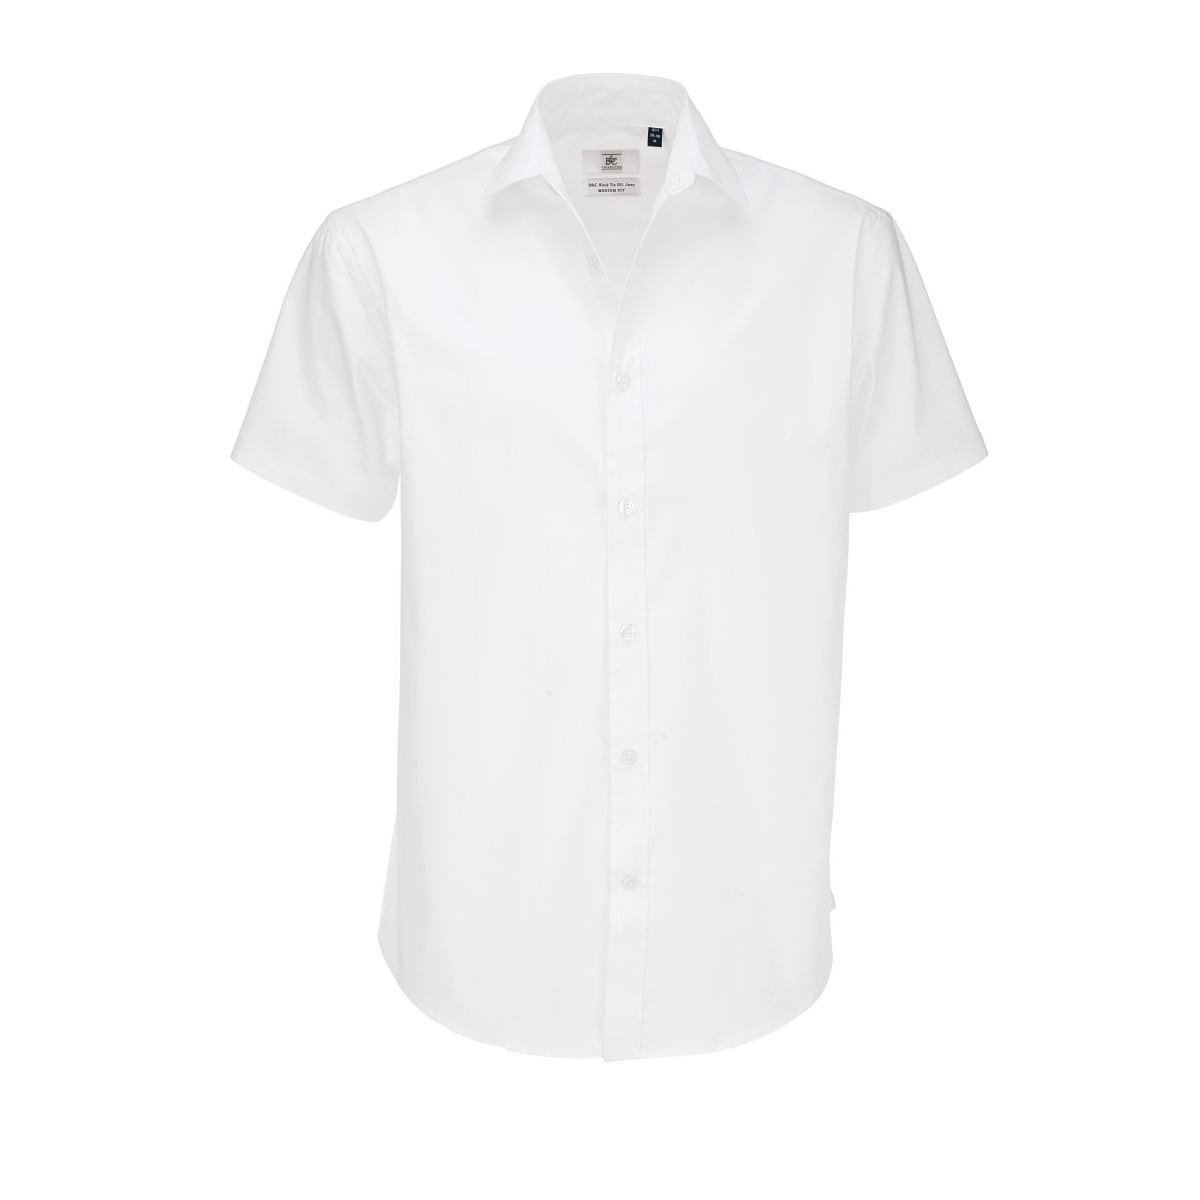 Pánská elastická popelínová košile B&C Black Tie s krátkým rukávem - bílá, S